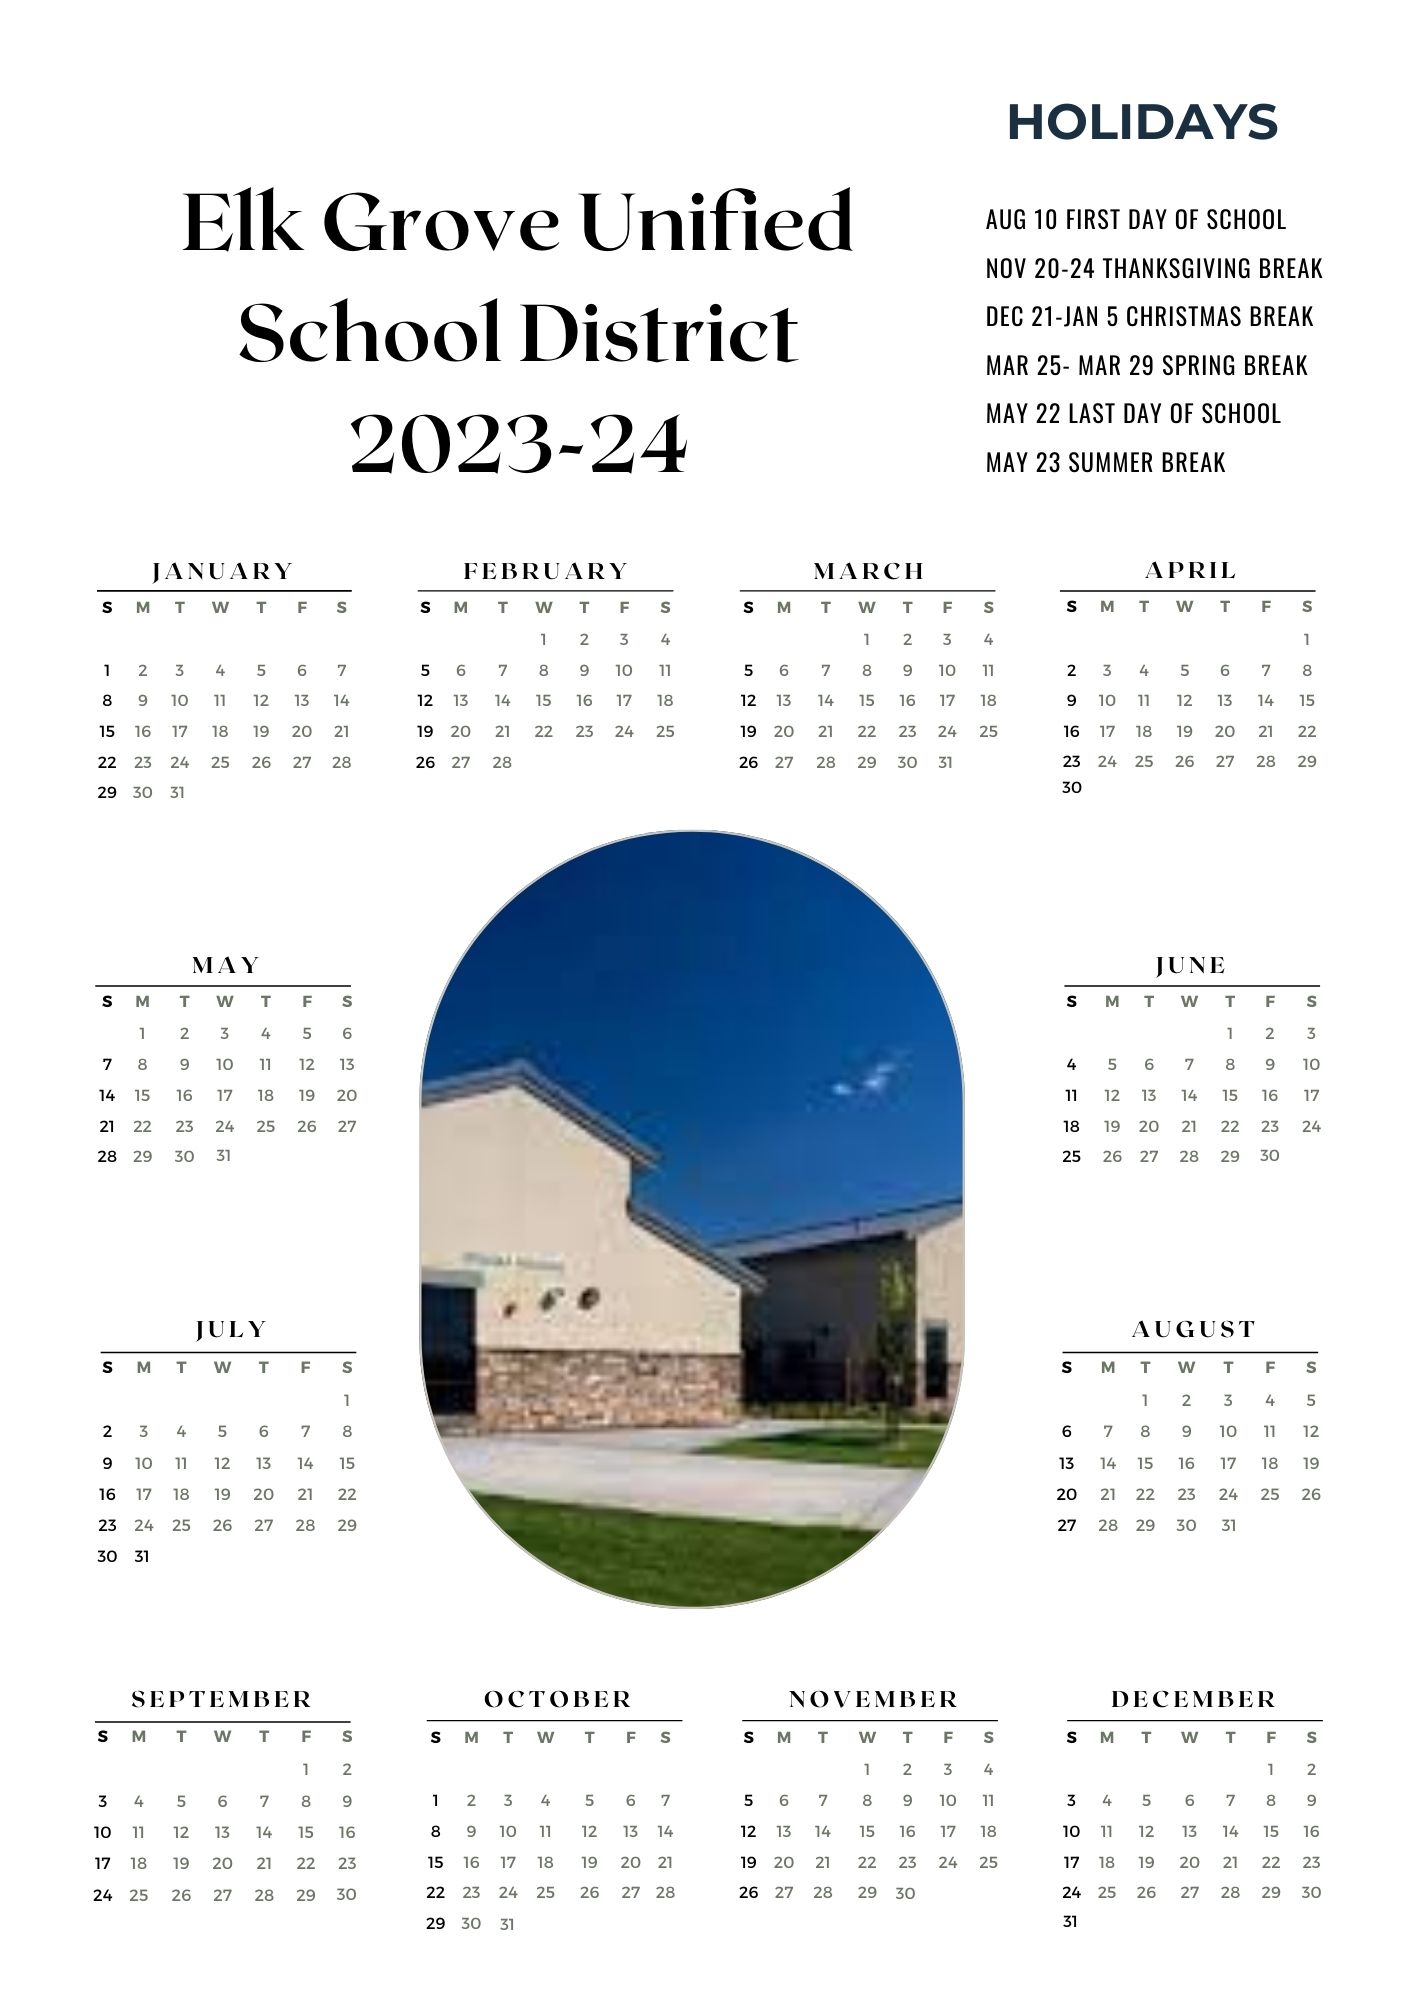 elk-grove-unified-school-district-calendar-holidays-2023-2024